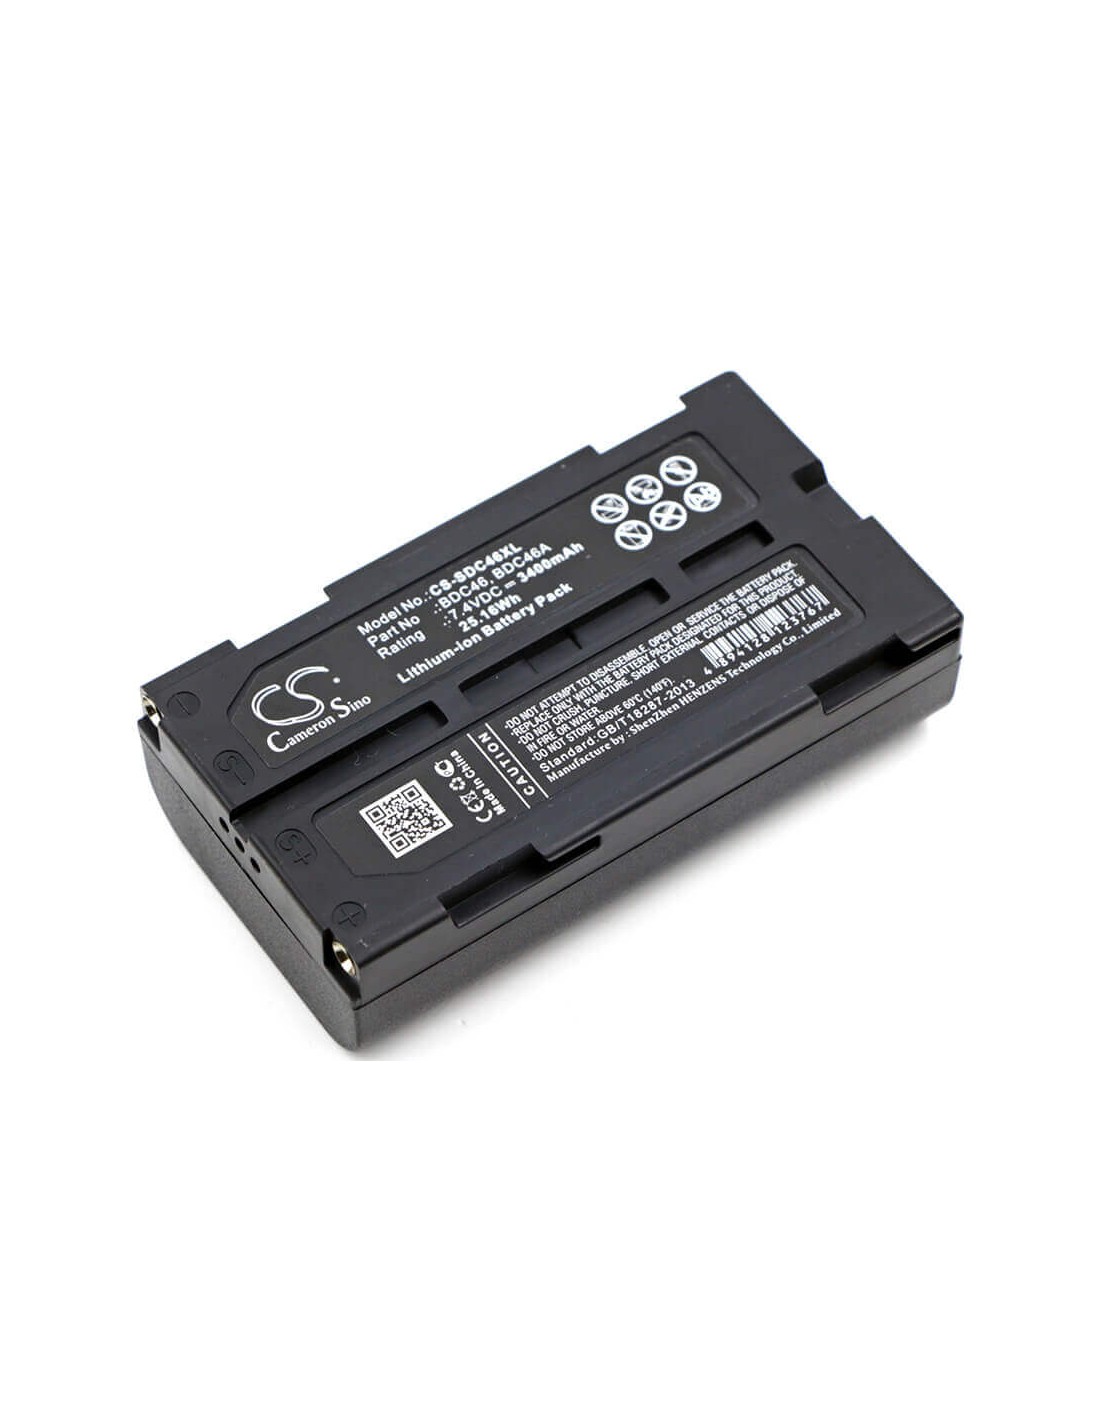 Battery for Pentax, Da020f, Rca, Cc-8251, Pro-v730 7.4V, 3400mAh - 25.16Wh